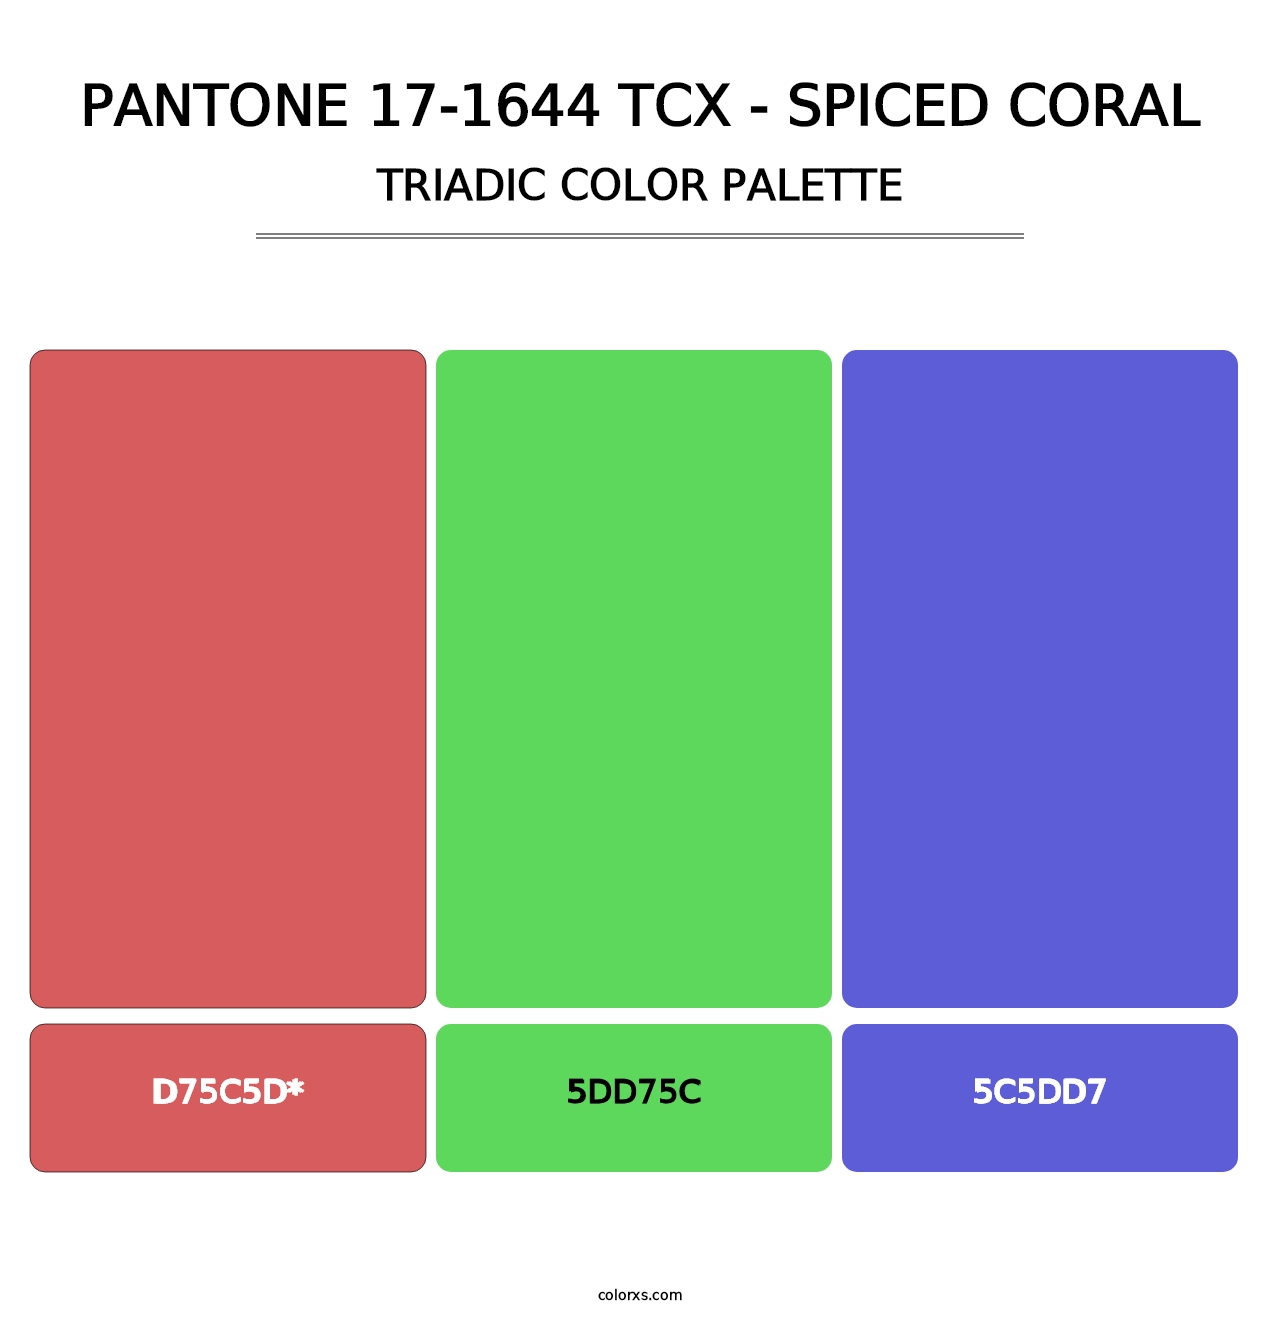 PANTONE 17-1644 TCX - Spiced Coral - Triadic Color Palette